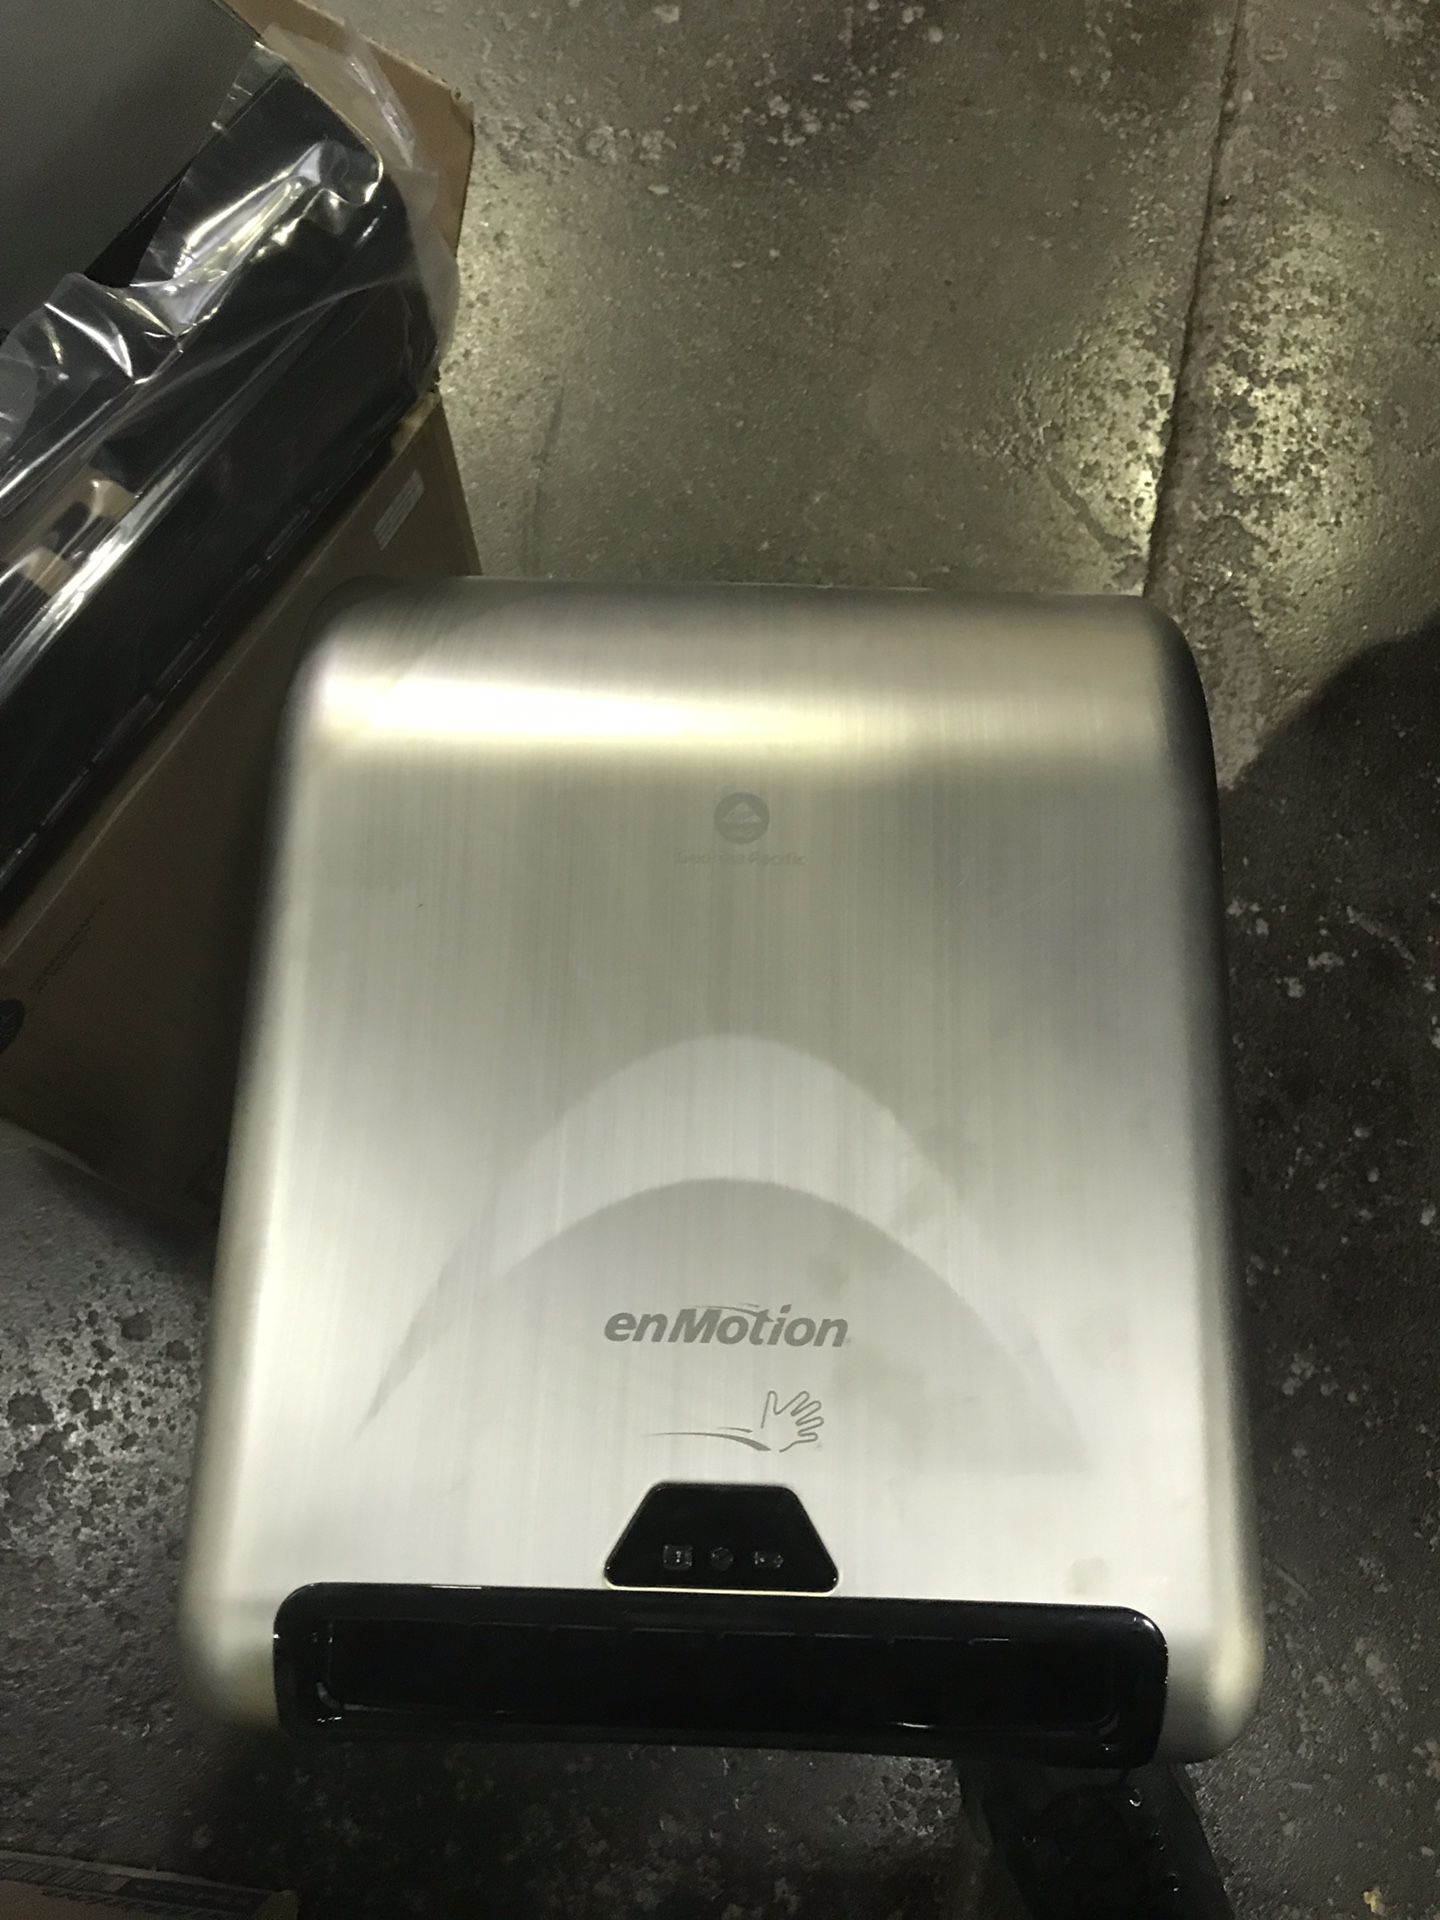 Enmotion paper towel dispenser